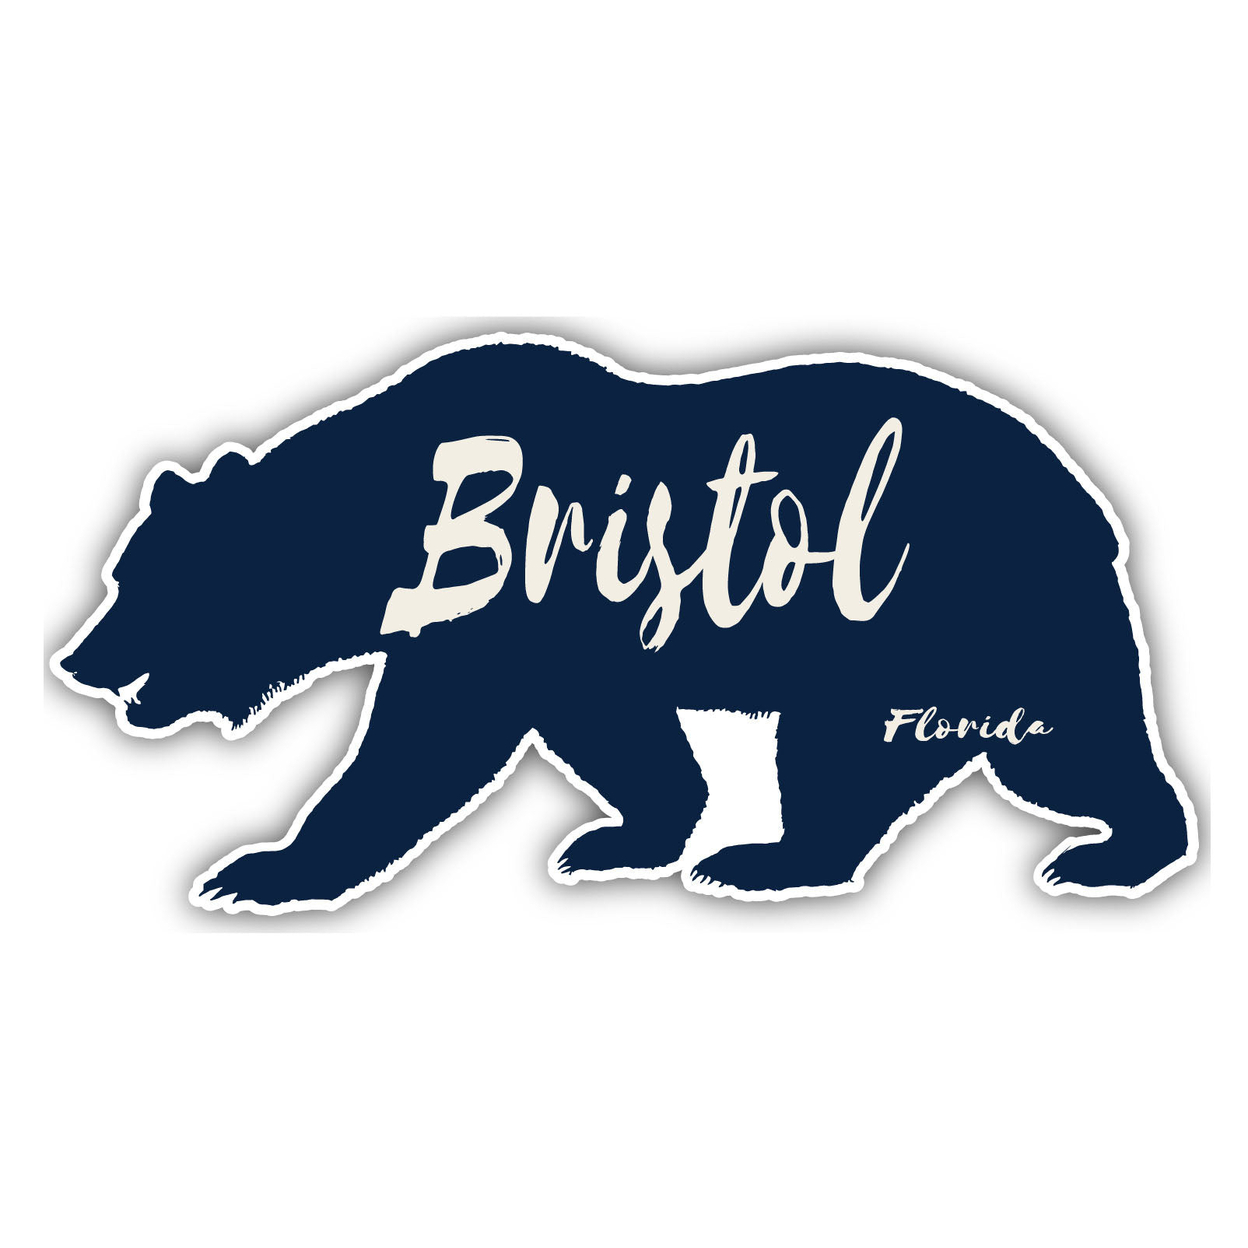 Bristol Florida Souvenir Decorative Stickers (Choose Theme And Size) - 4-Pack, 8-Inch, Bear